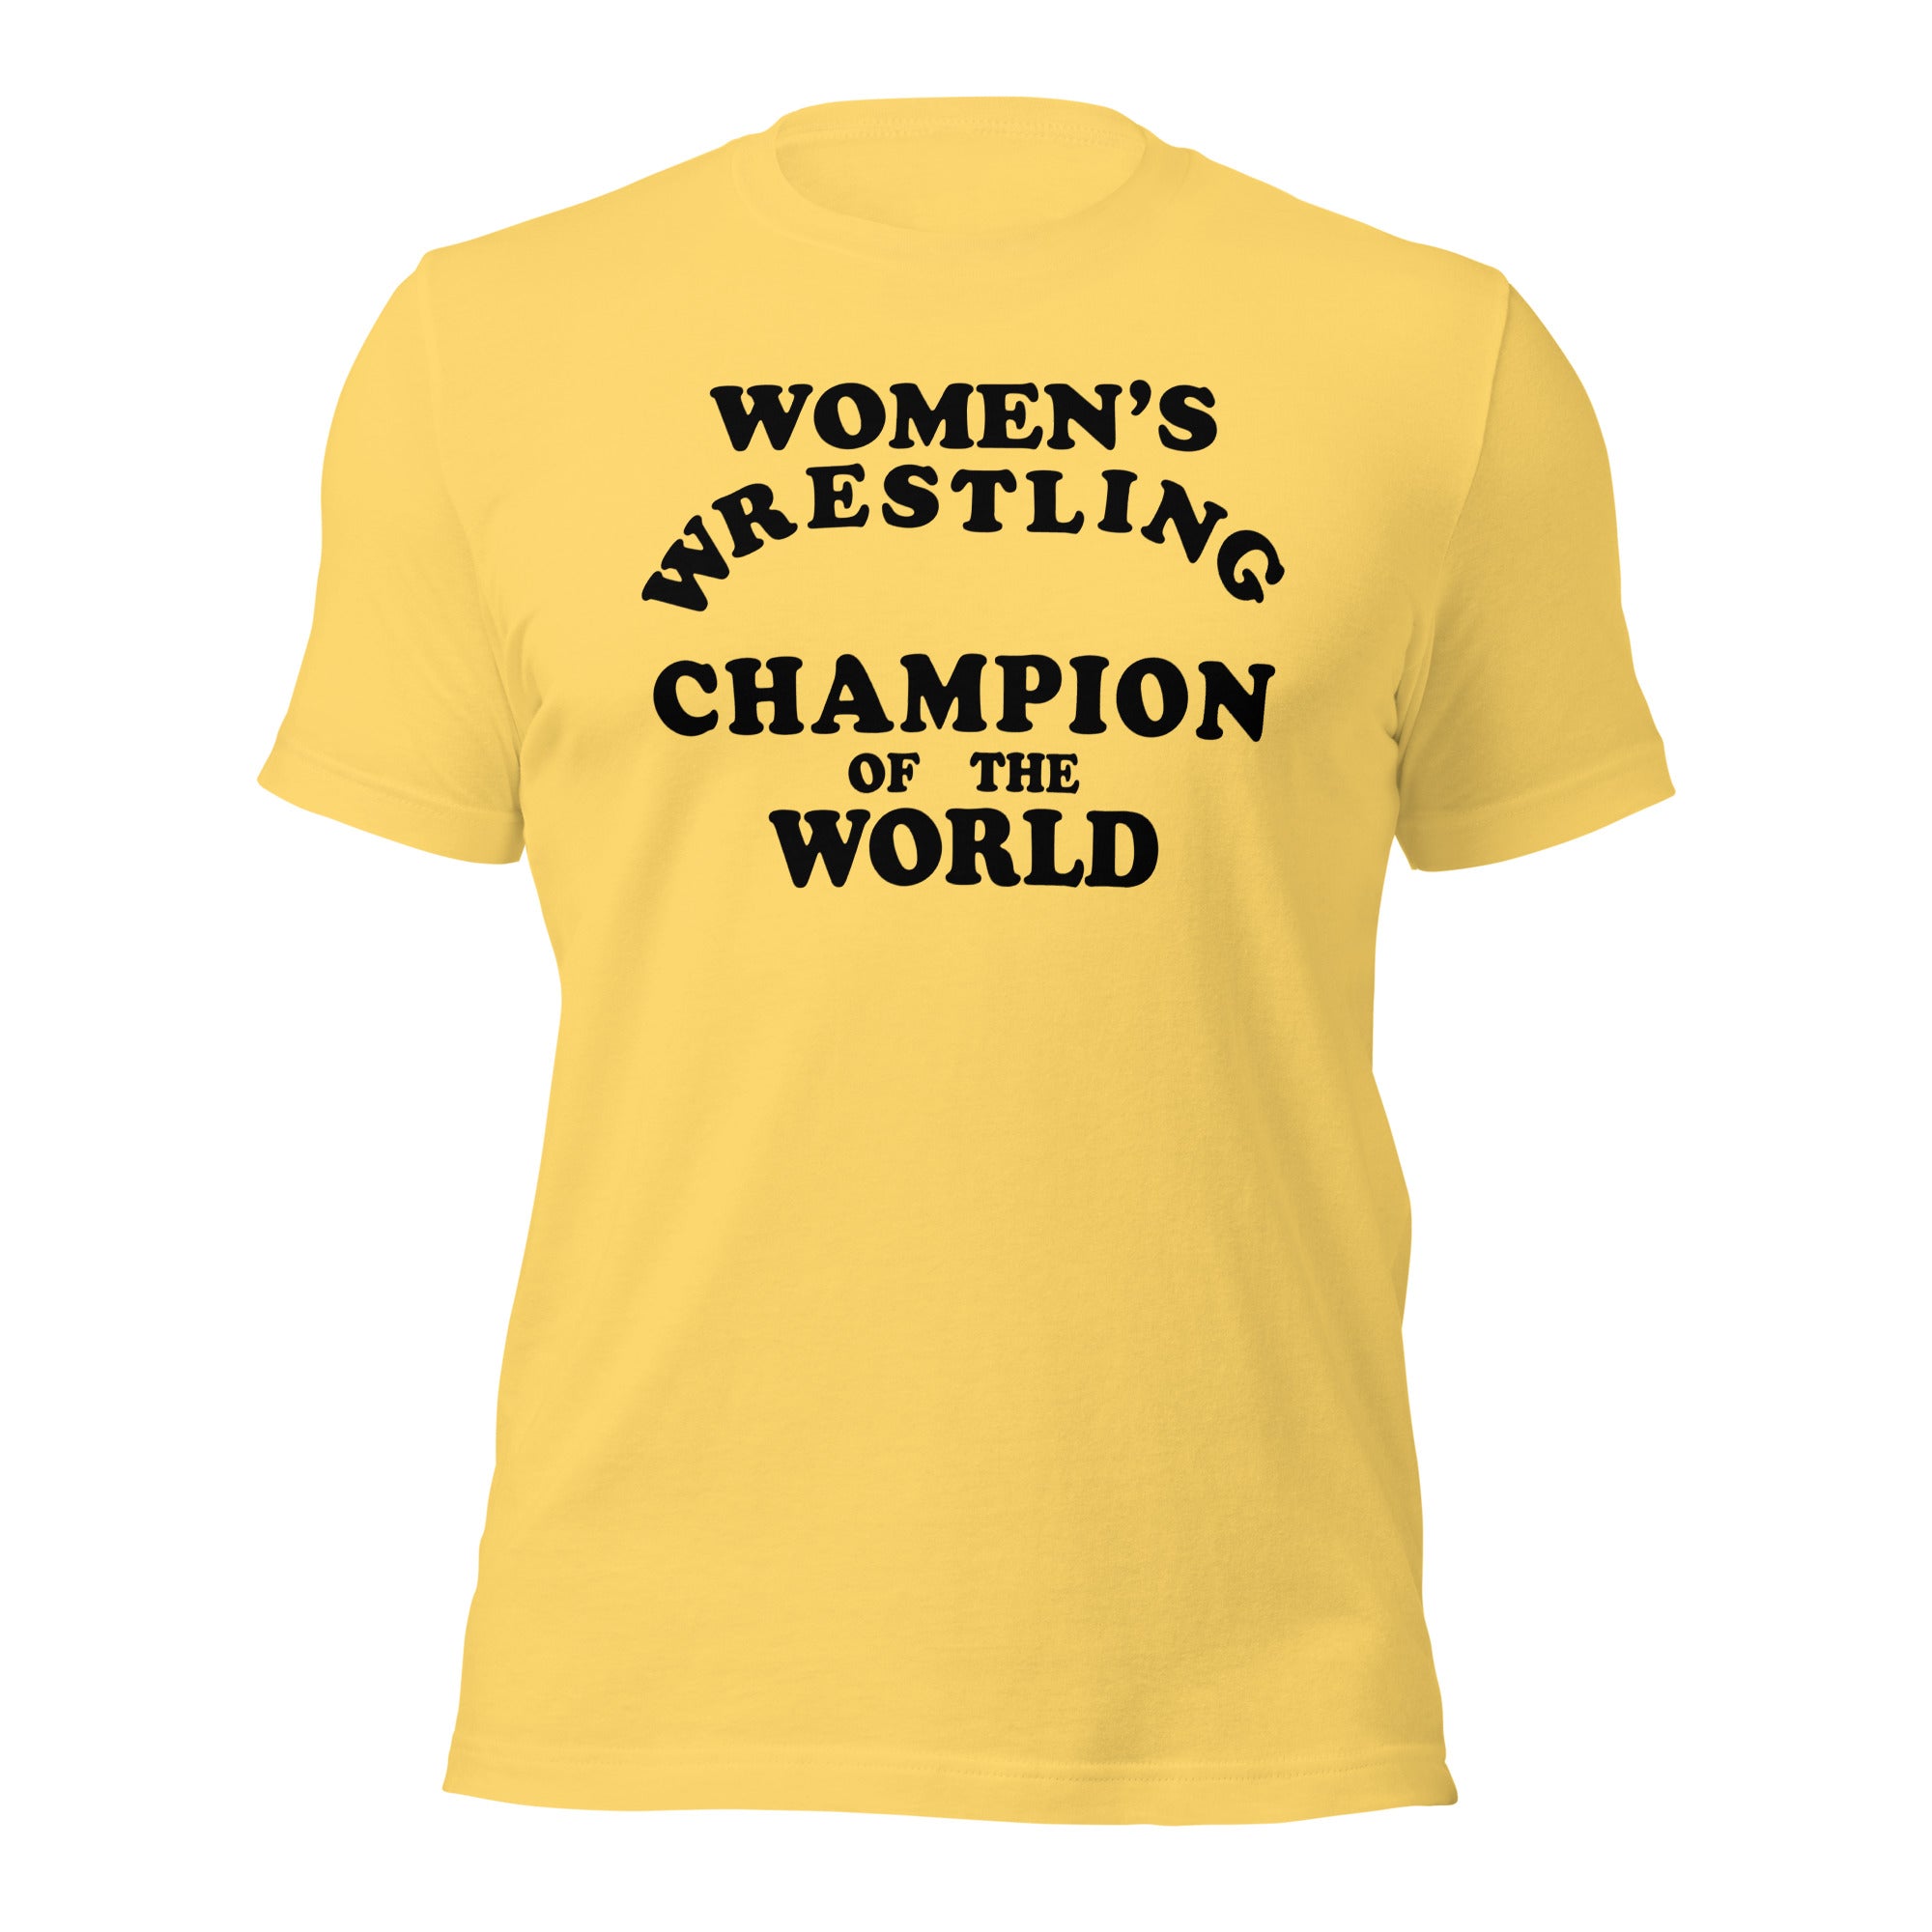 Women's Wrestling Champion of the World Kauffman T-Shirt